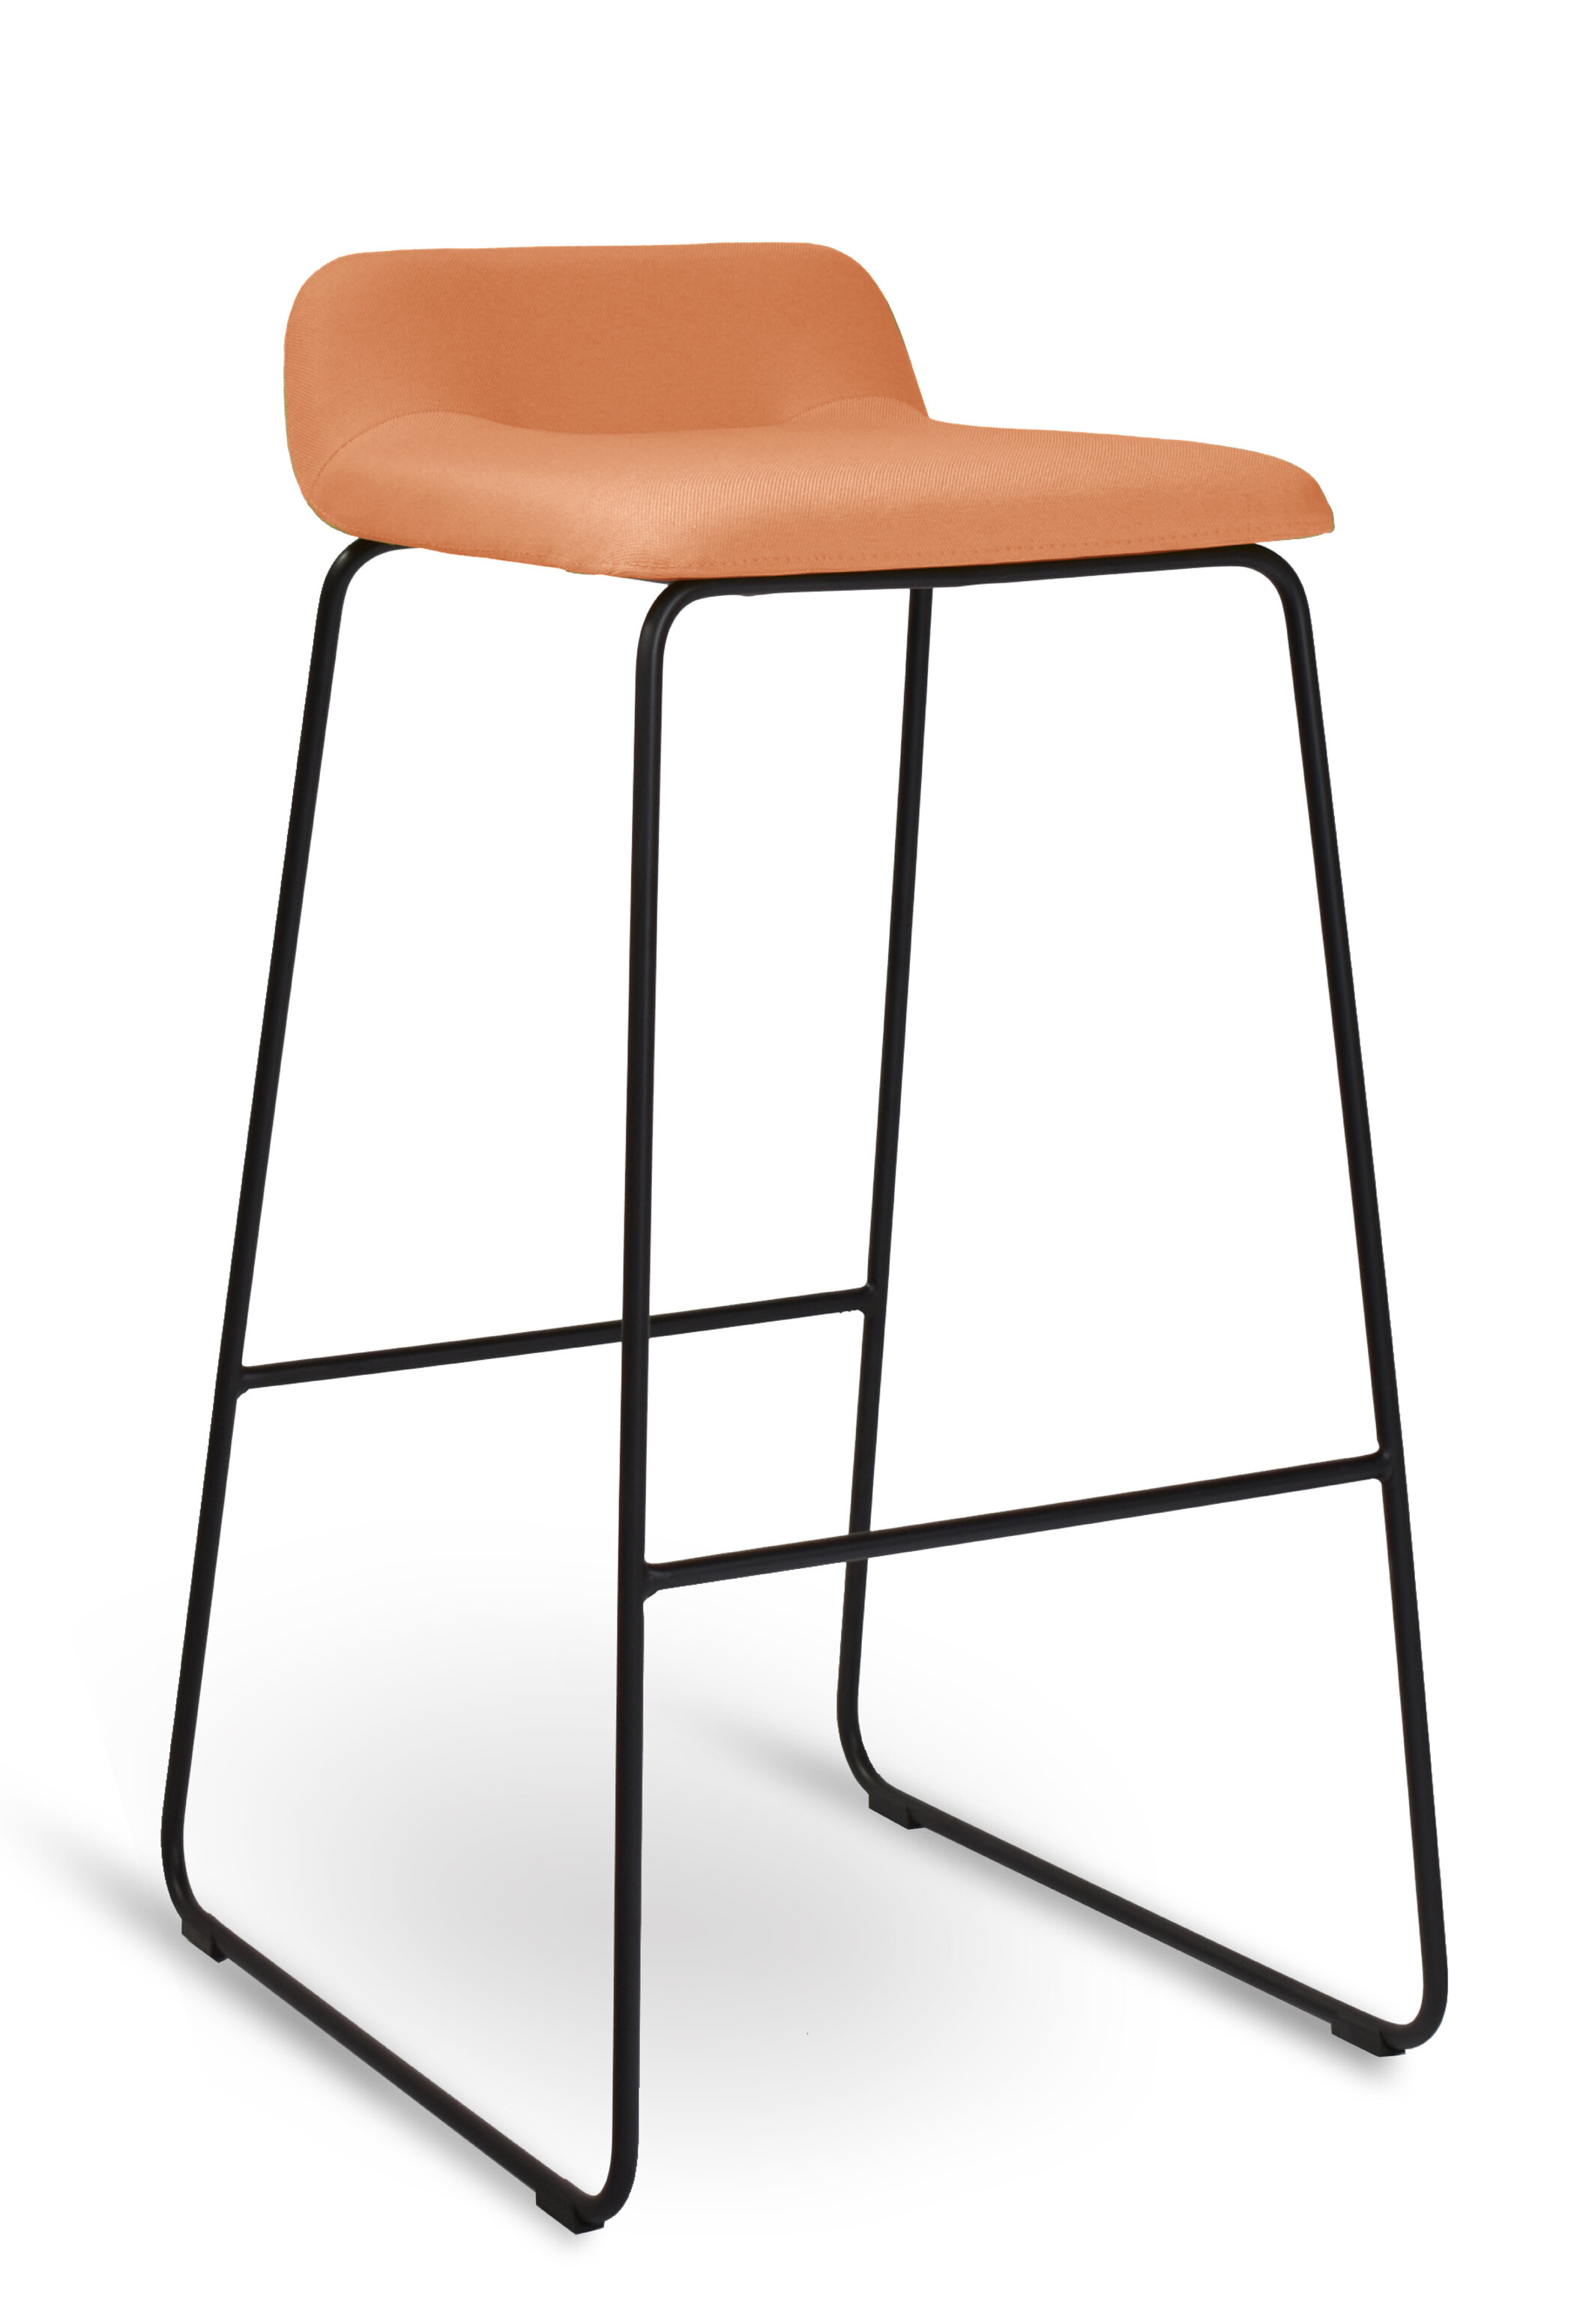 WS - Lolli high stool - ERA CSE25 SEQUENCE